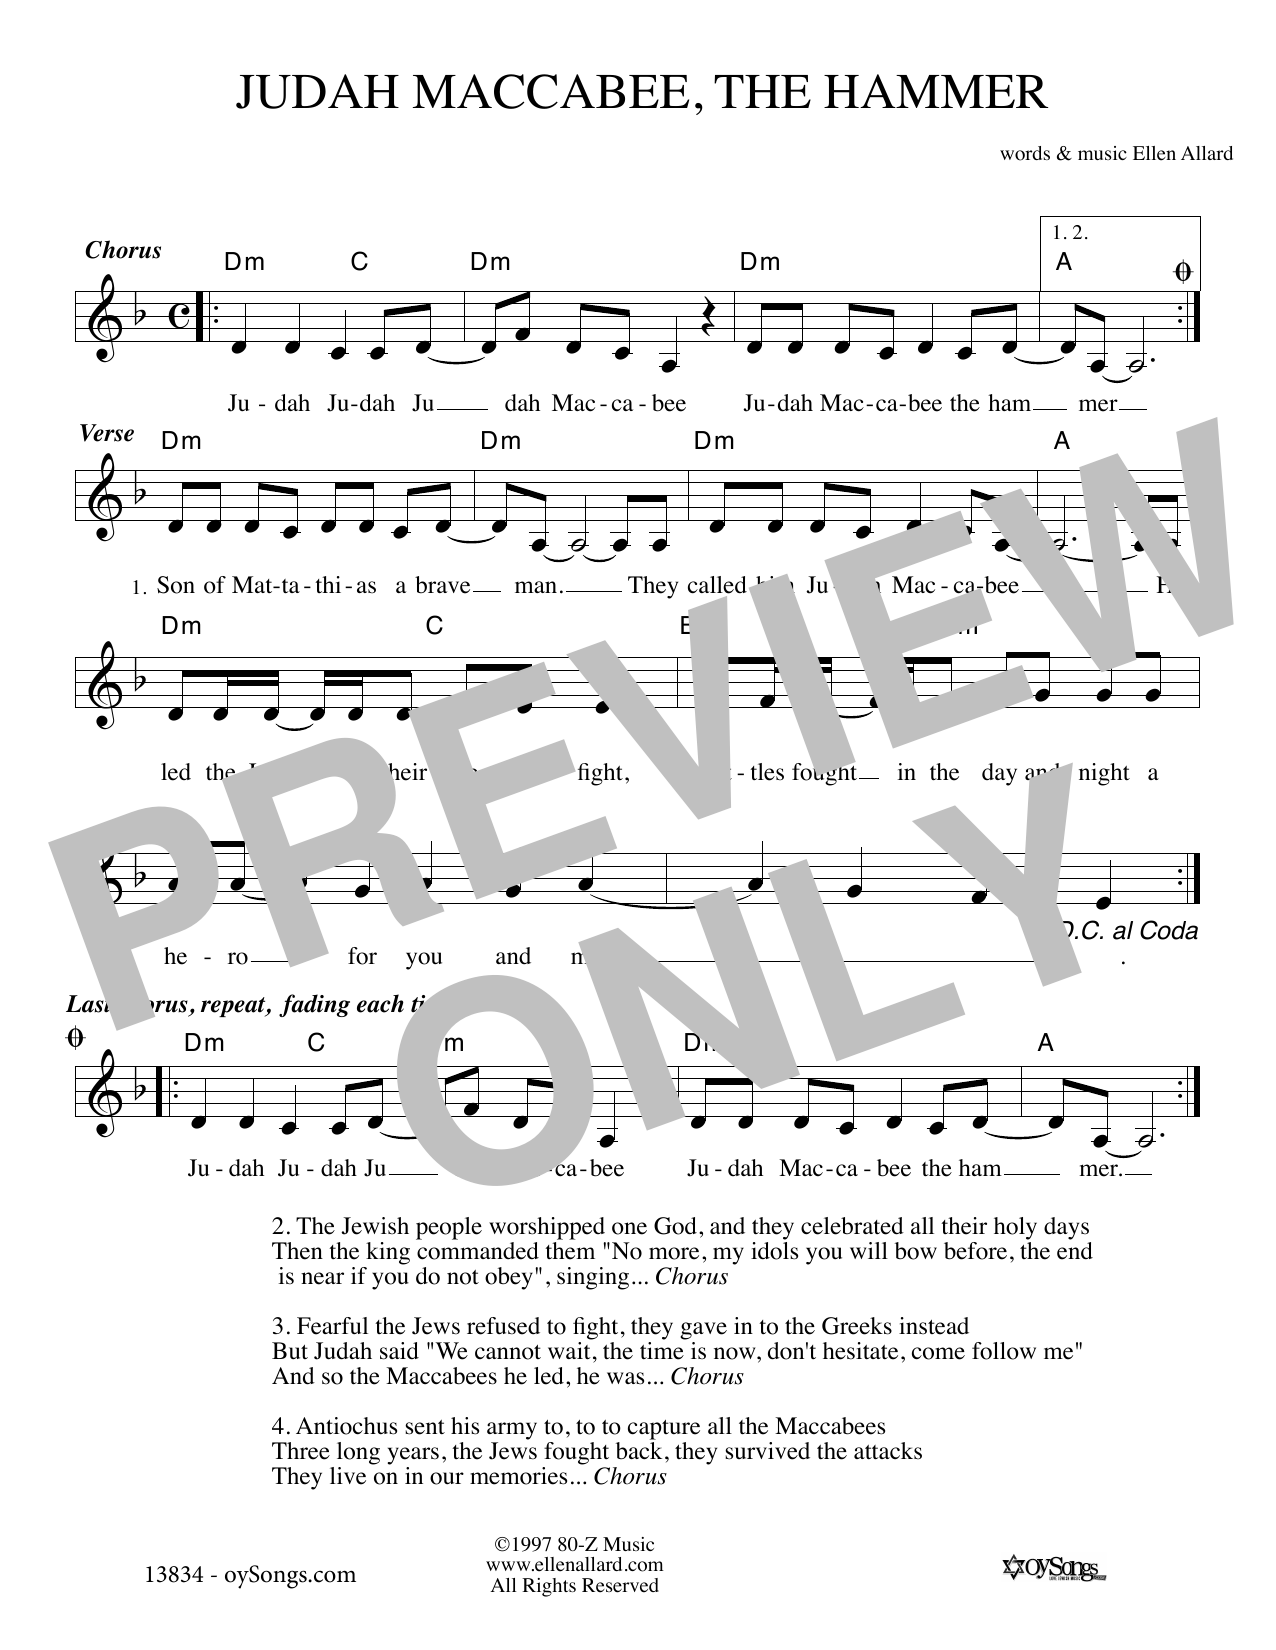 Ellen Allard Judah Macabee Sheet Music Notes & Chords for Melody Line, Lyrics & Chords - Download or Print PDF